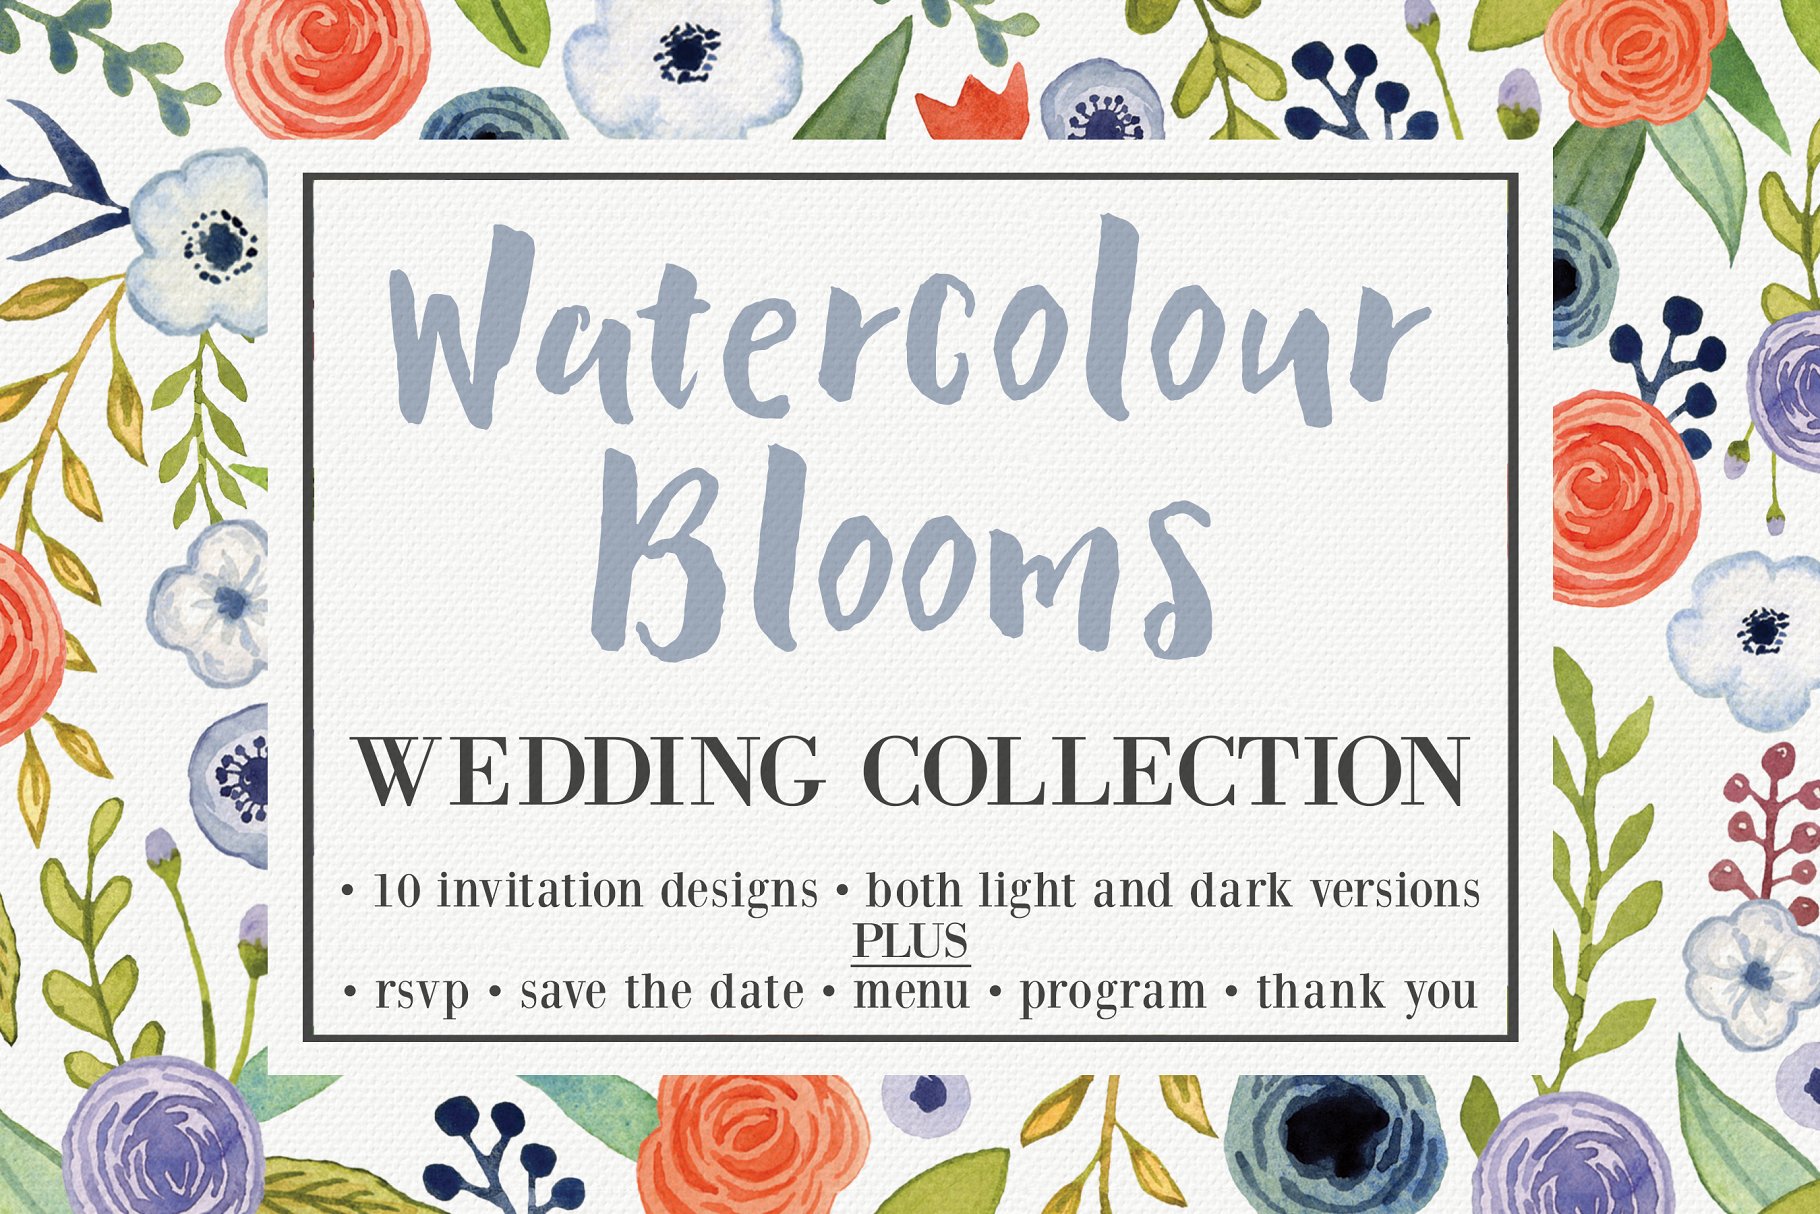 绽放花卉婚礼设计物料水彩素材合集 Watercolor Blooms Wedding Collection插图(1)